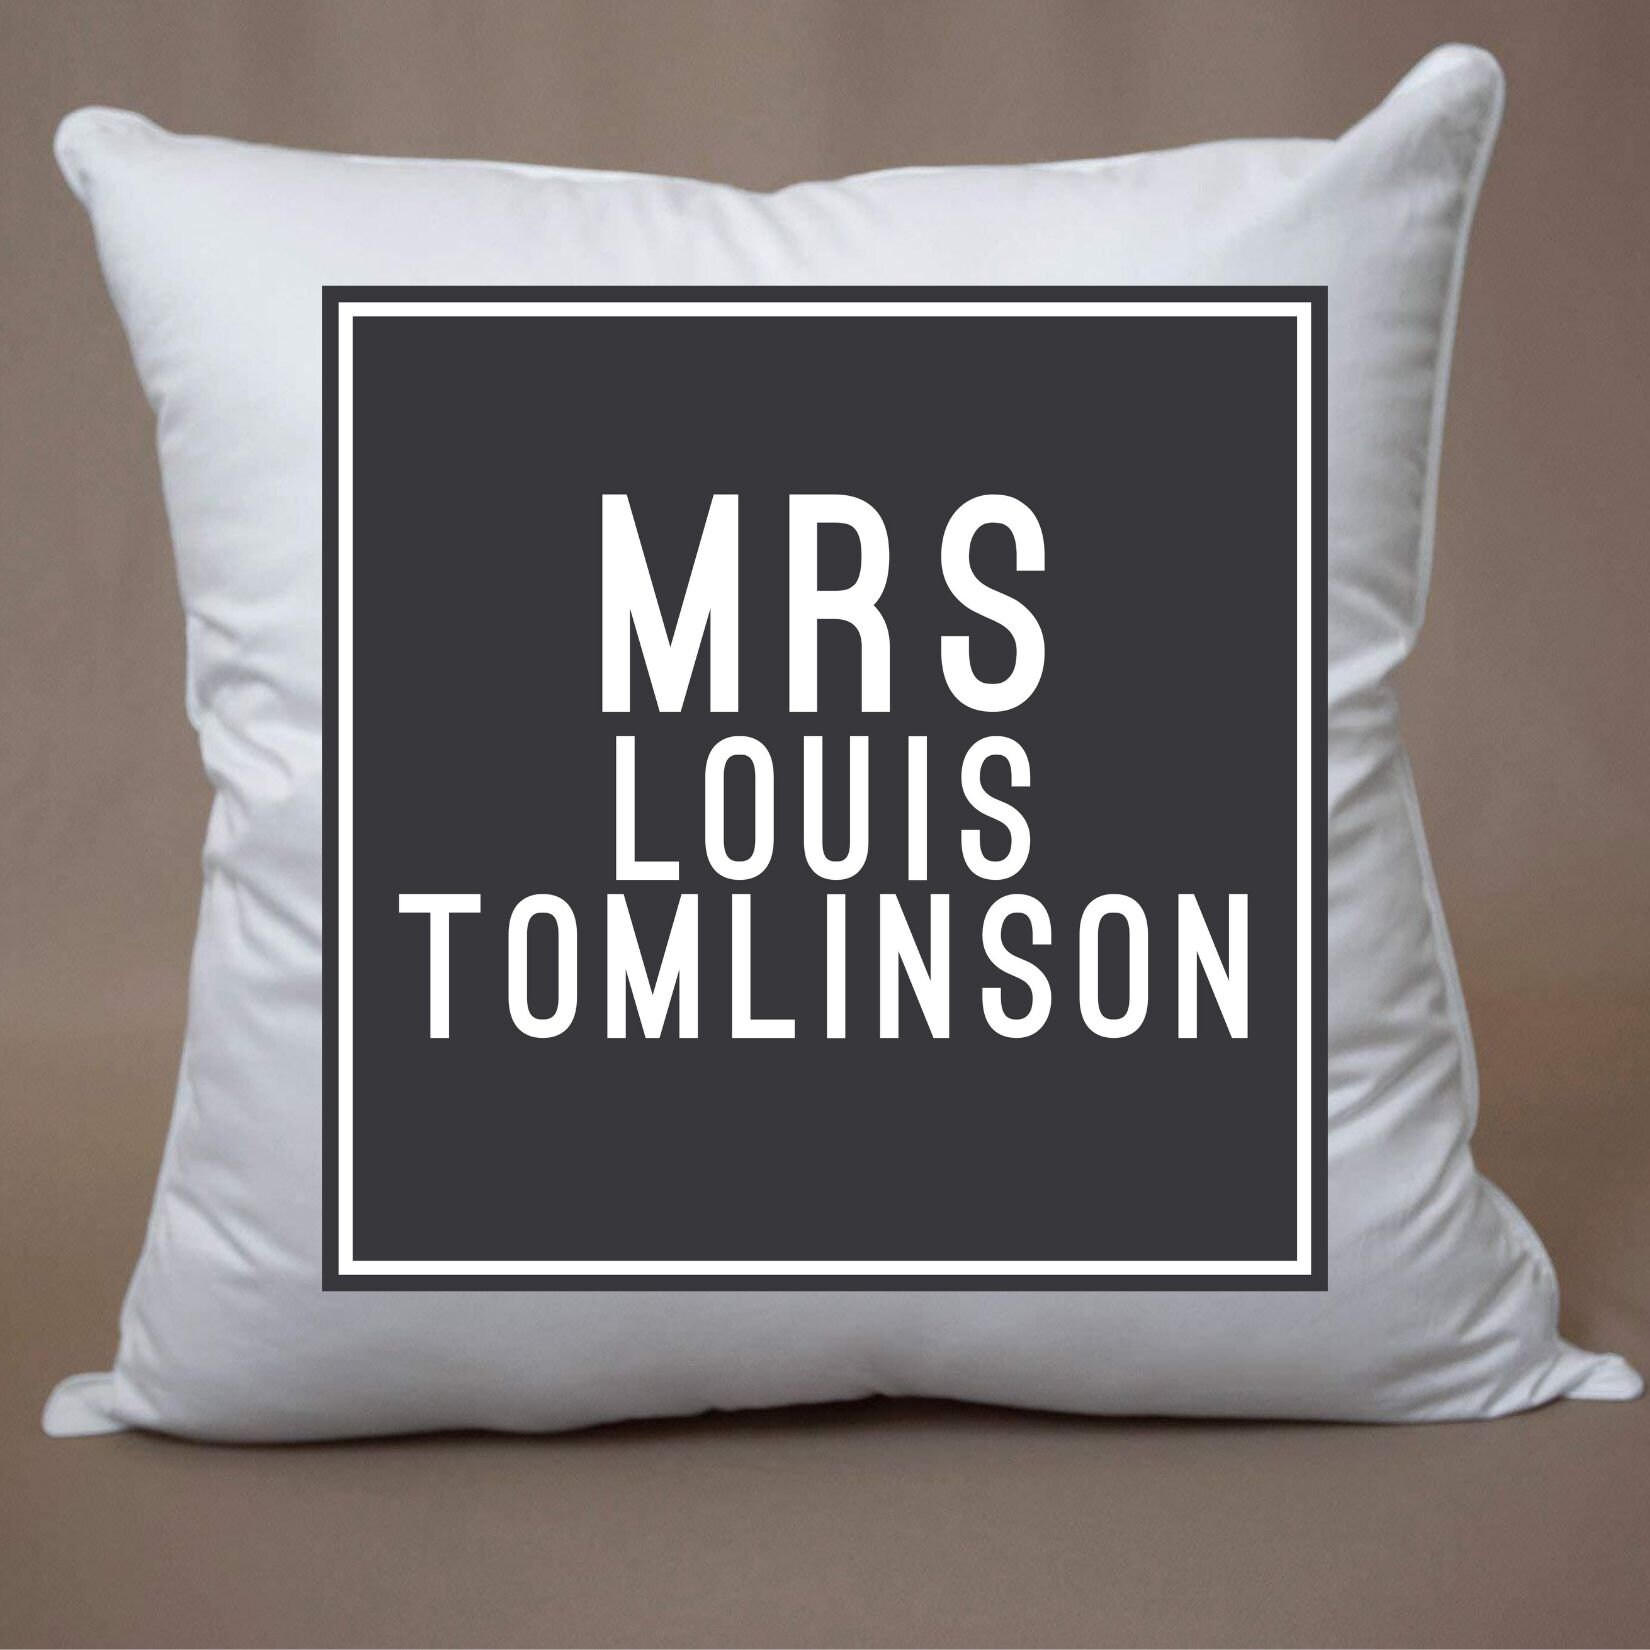 Cojines y almohadas: Just Hold On Louis Tomlinson